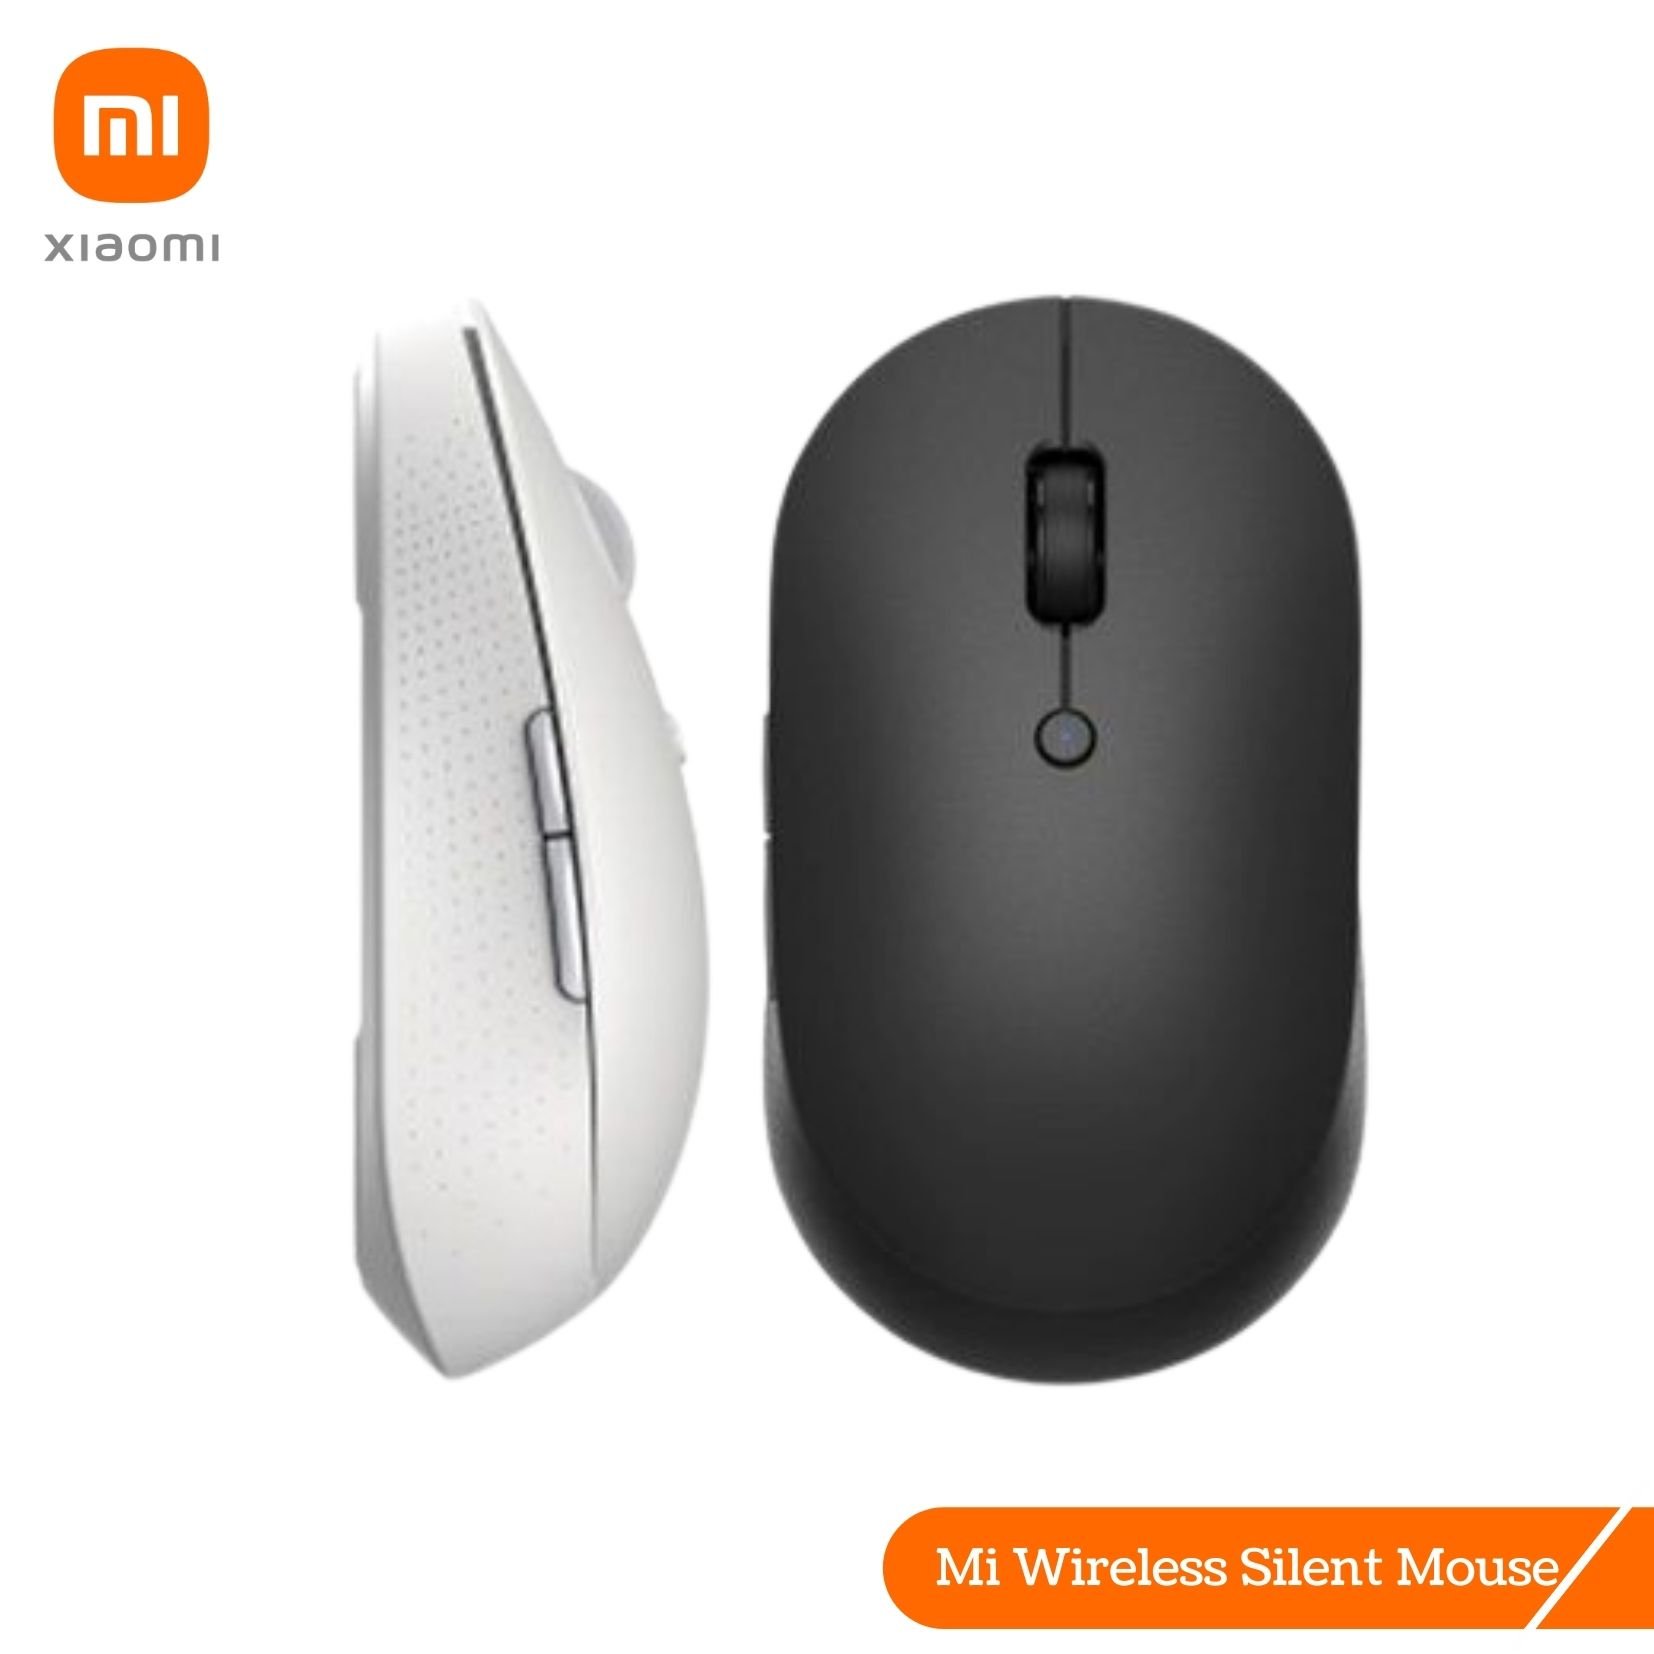 Mi Wireless Silent Mouse